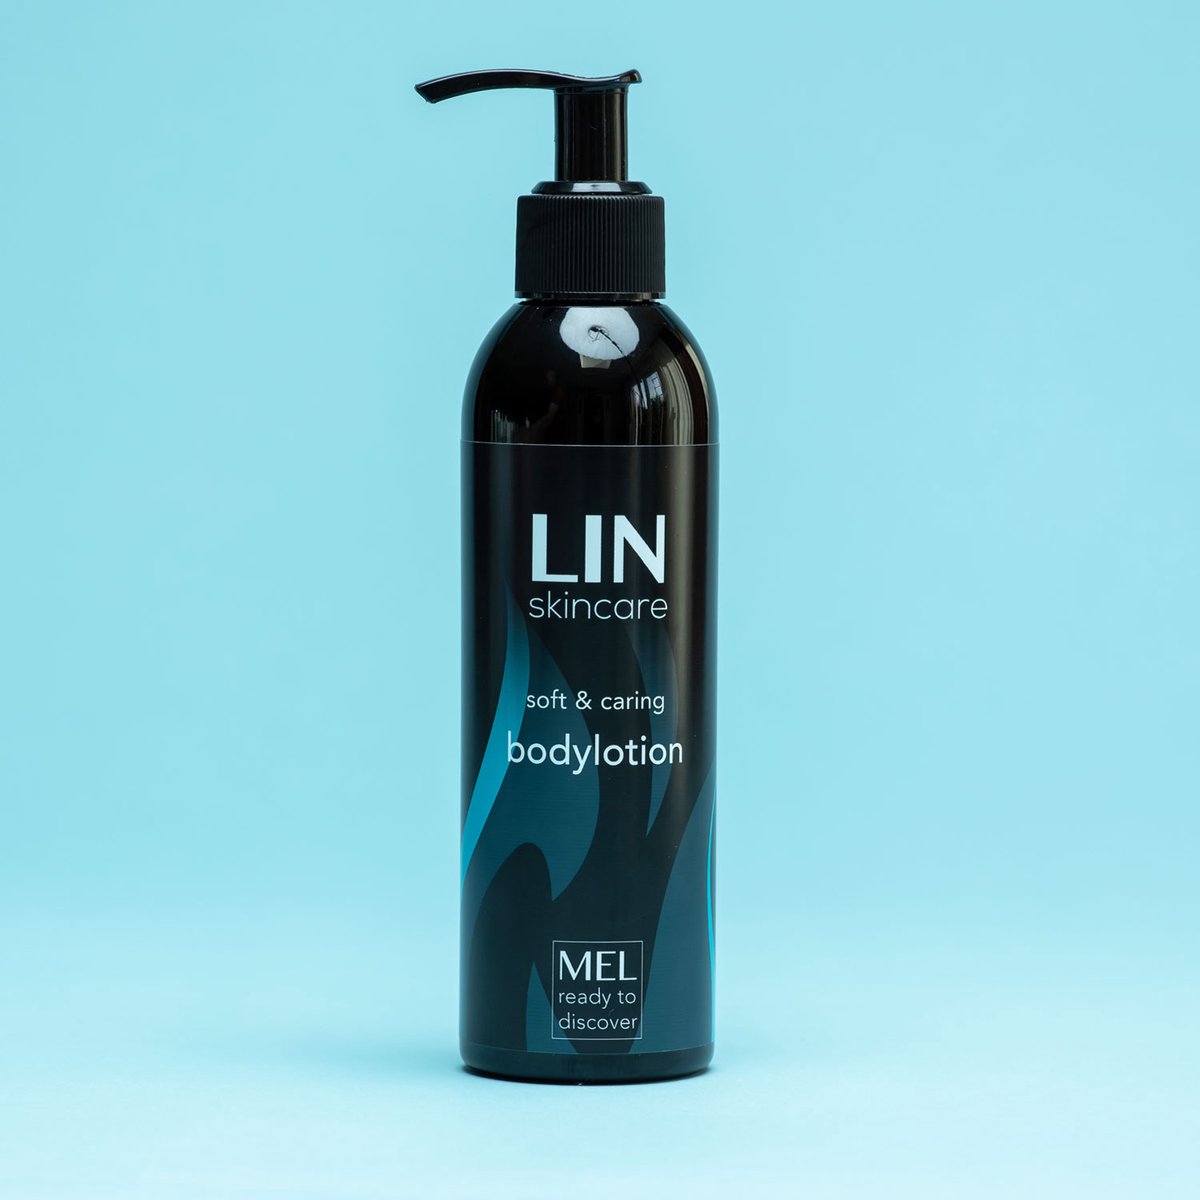 LIN Skincare - Bodylotion MEL